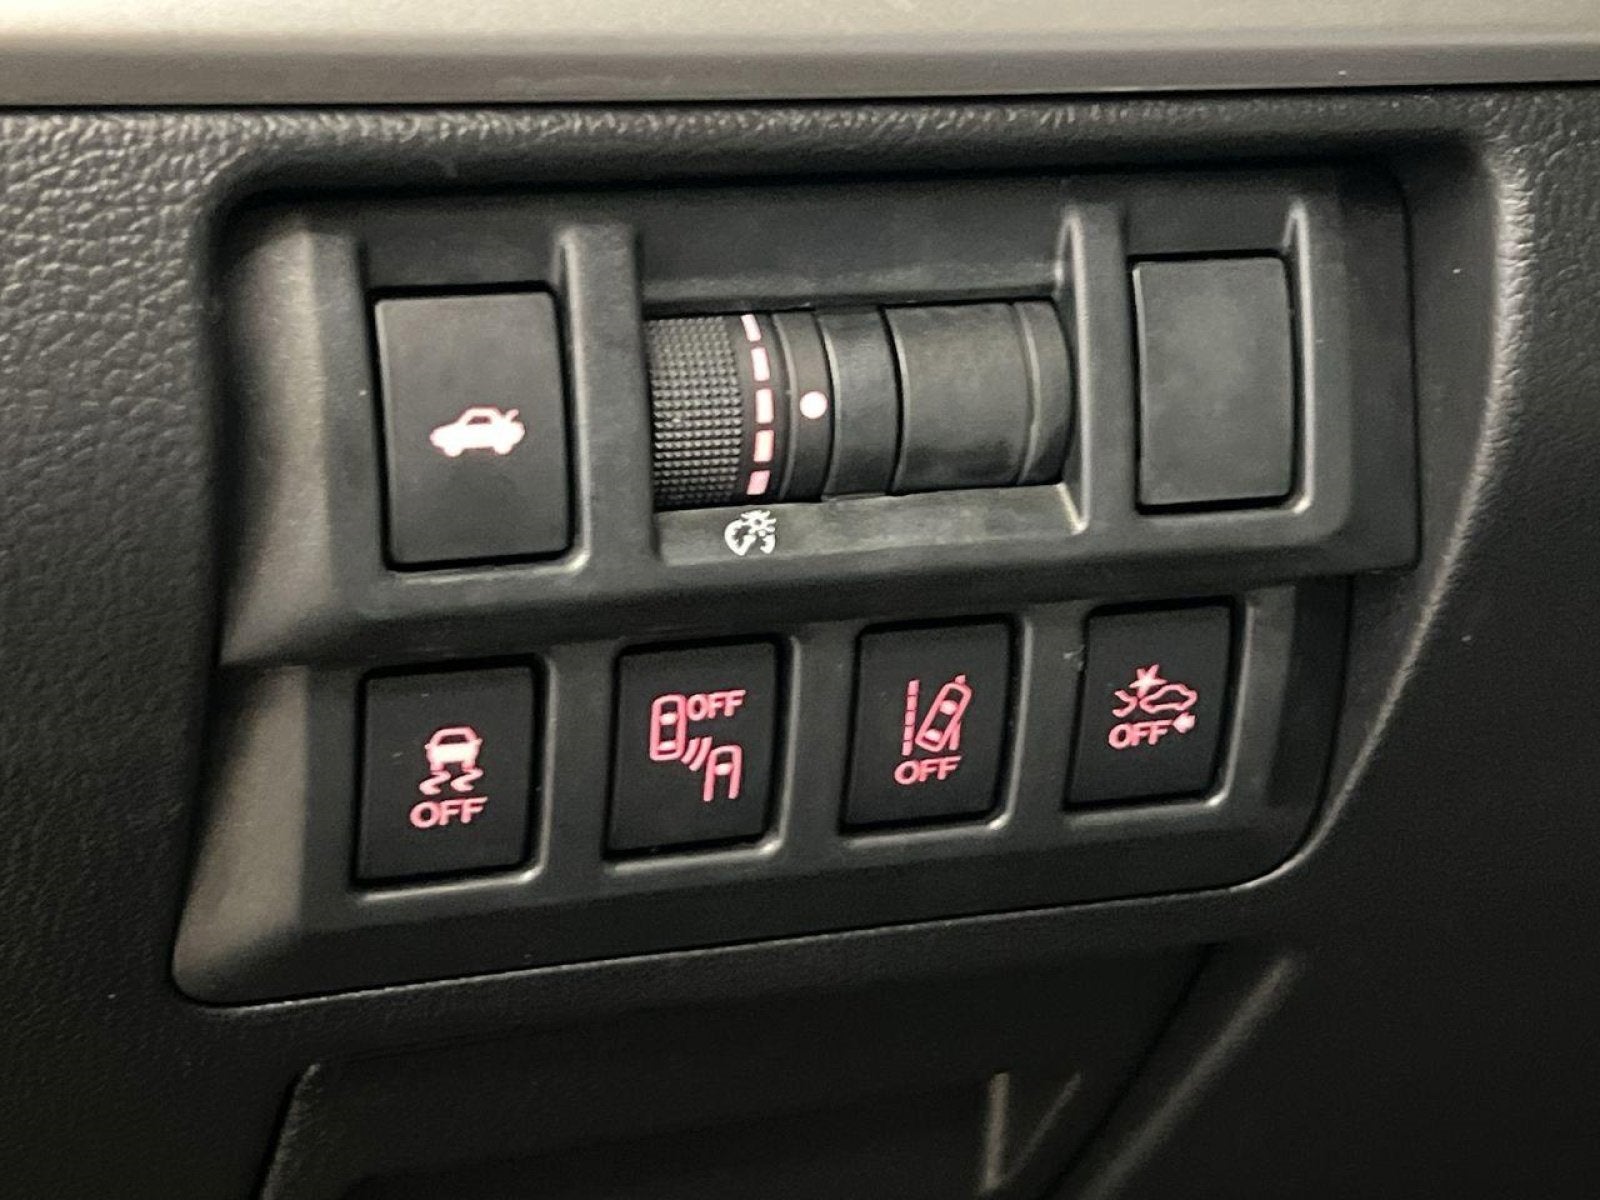 2019 Subaru Legacy 2.5i